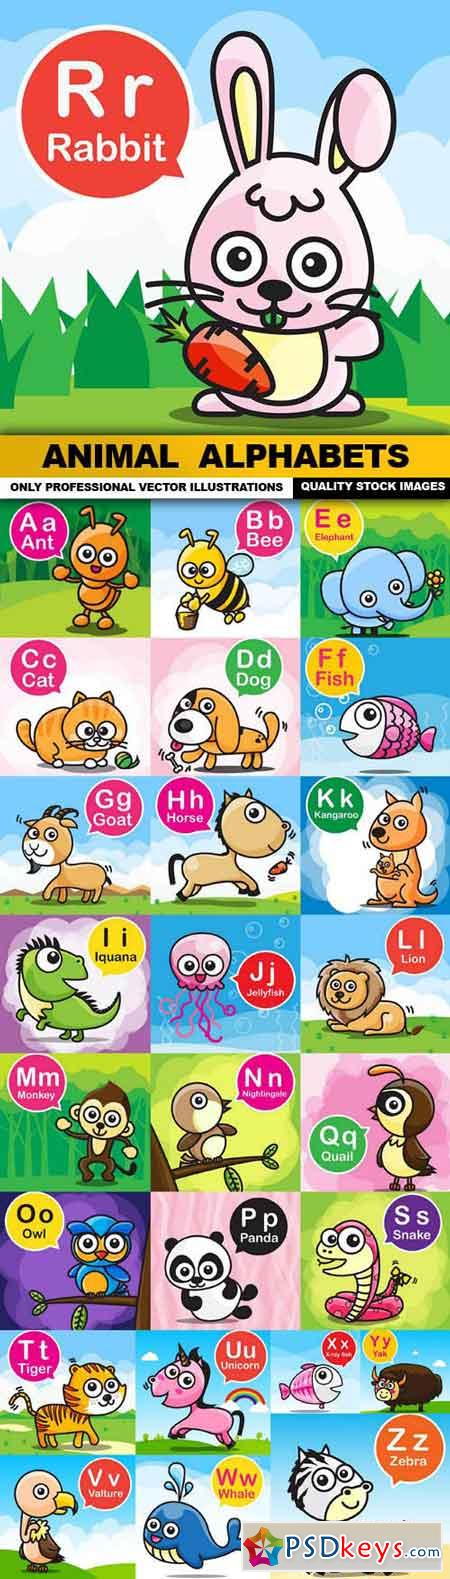 Animal Alphabets - 26 Vector